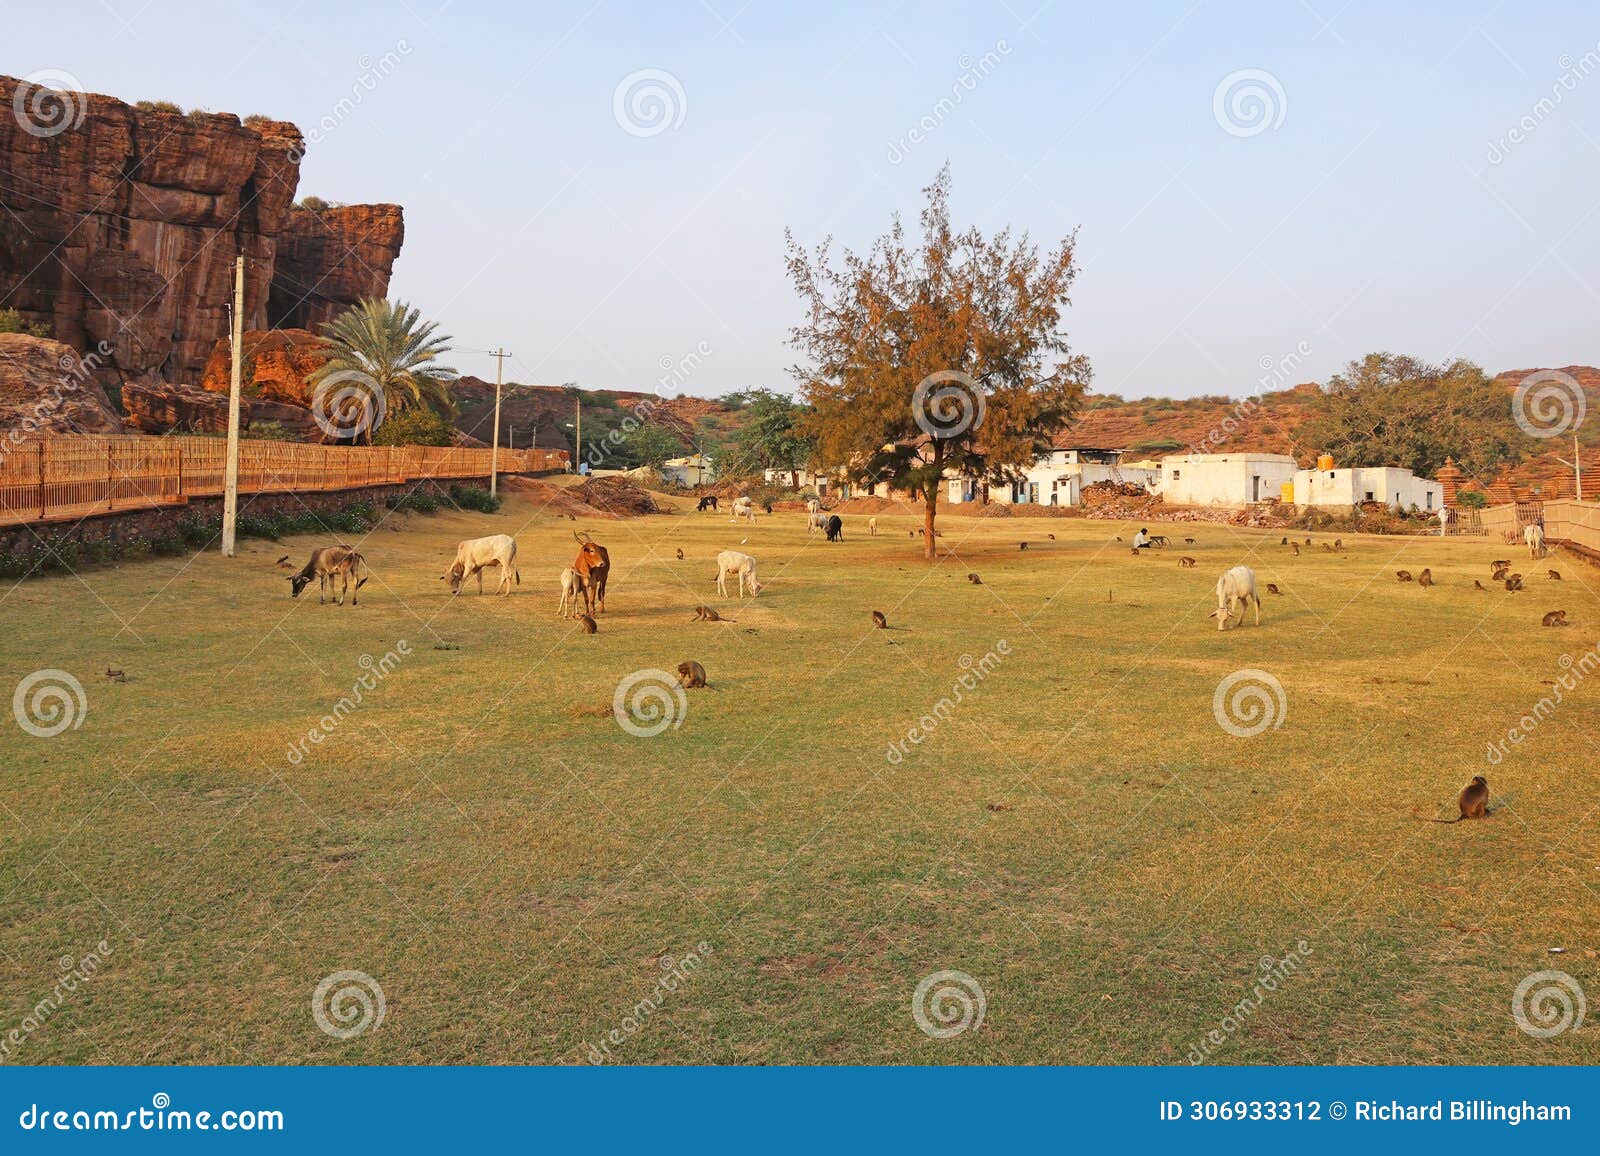 cattle and macaque monkey, badami, bagalkot, karnataka, india